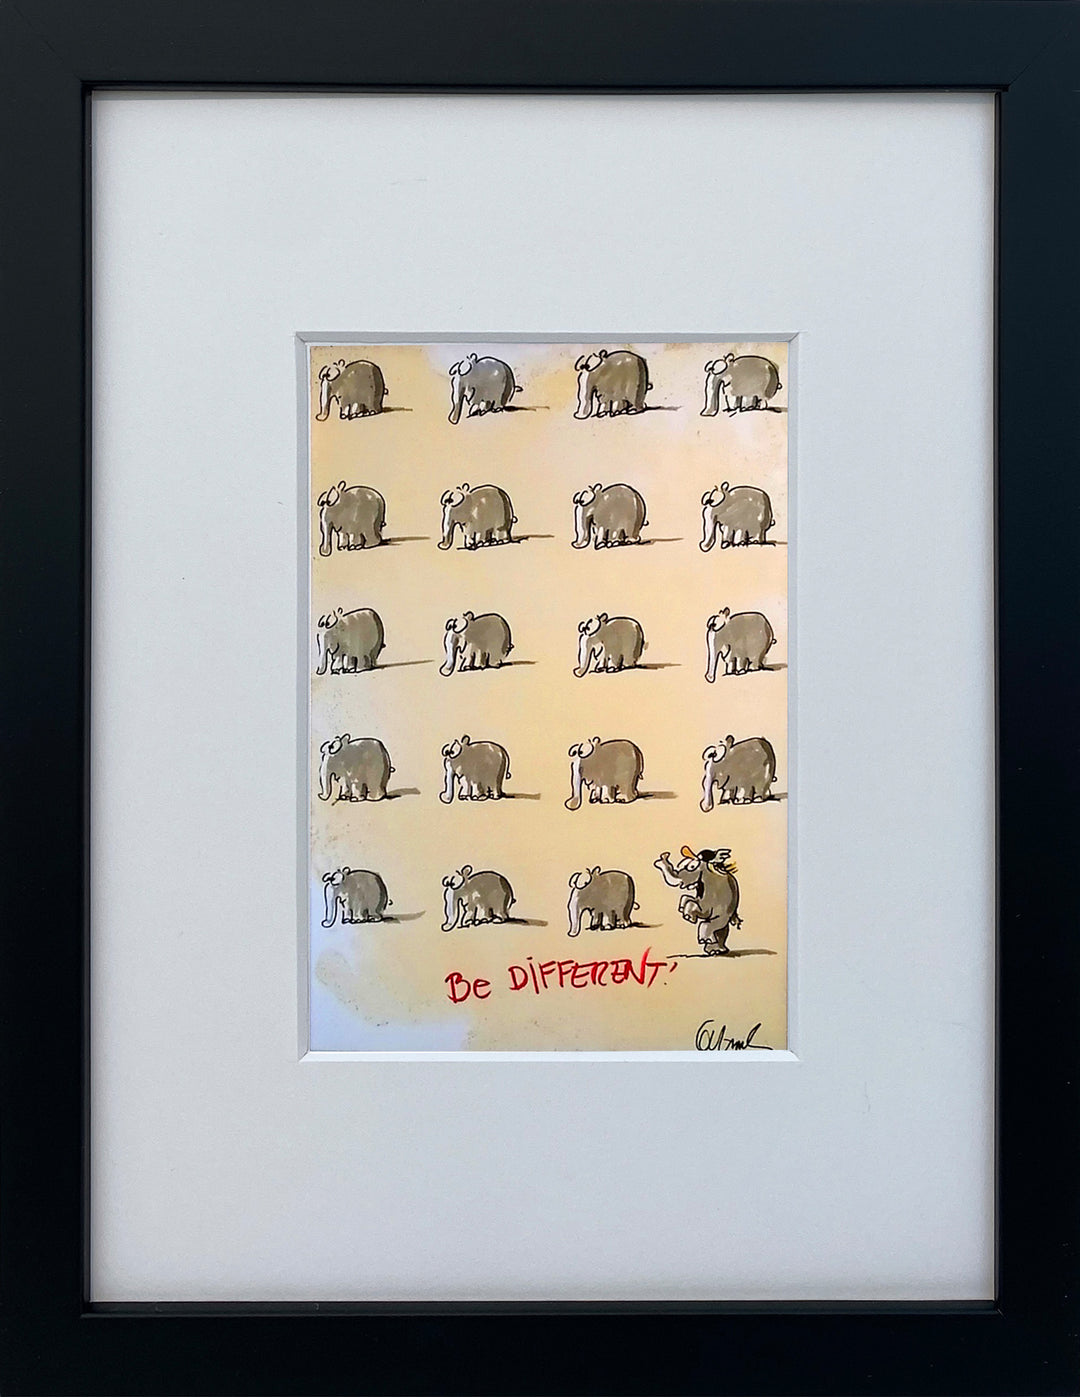 "Be different" | Otto Waalkes Miniprint